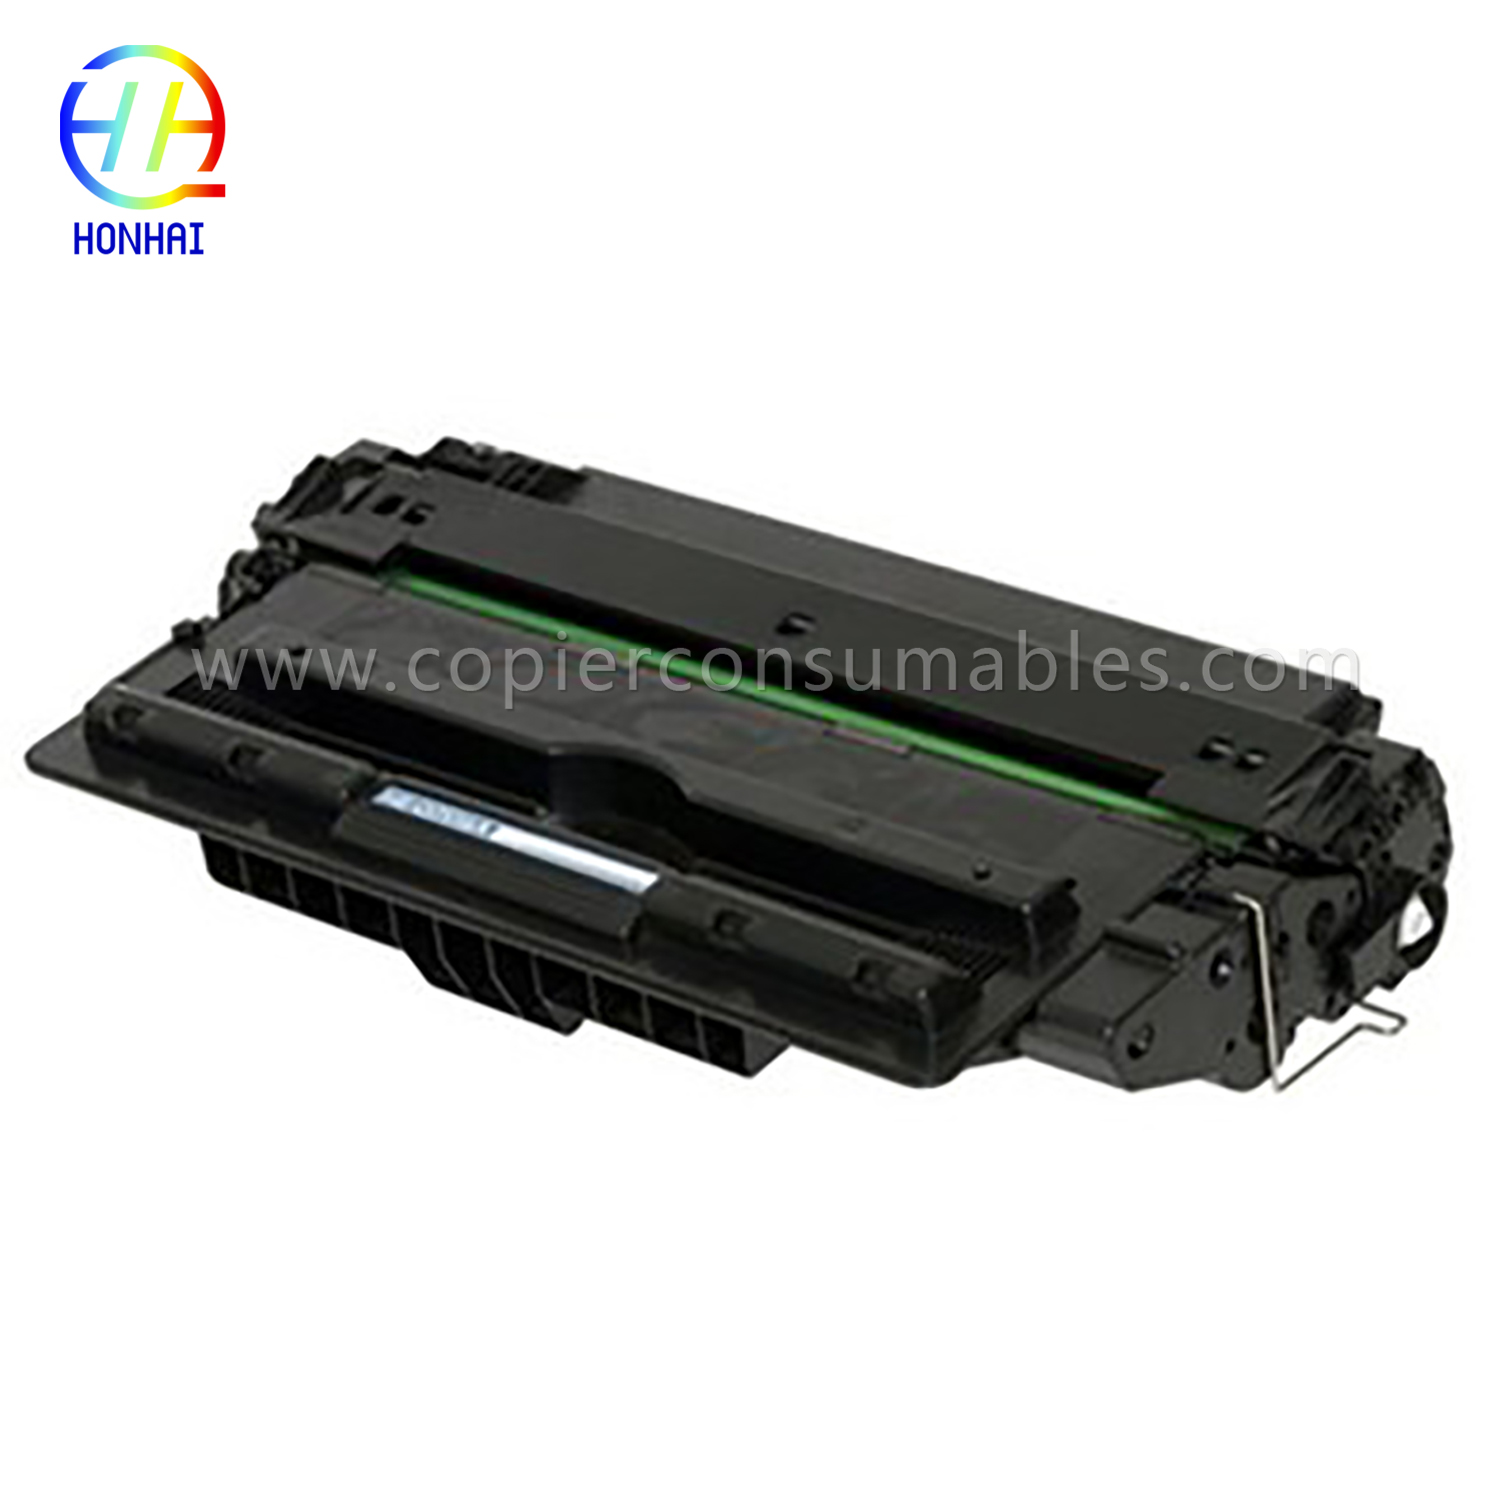 Toner Cartridge for HP LaserJet 5200 5200n 5200tn 5200dtn 5200L (Q7516A) (2) 拷贝